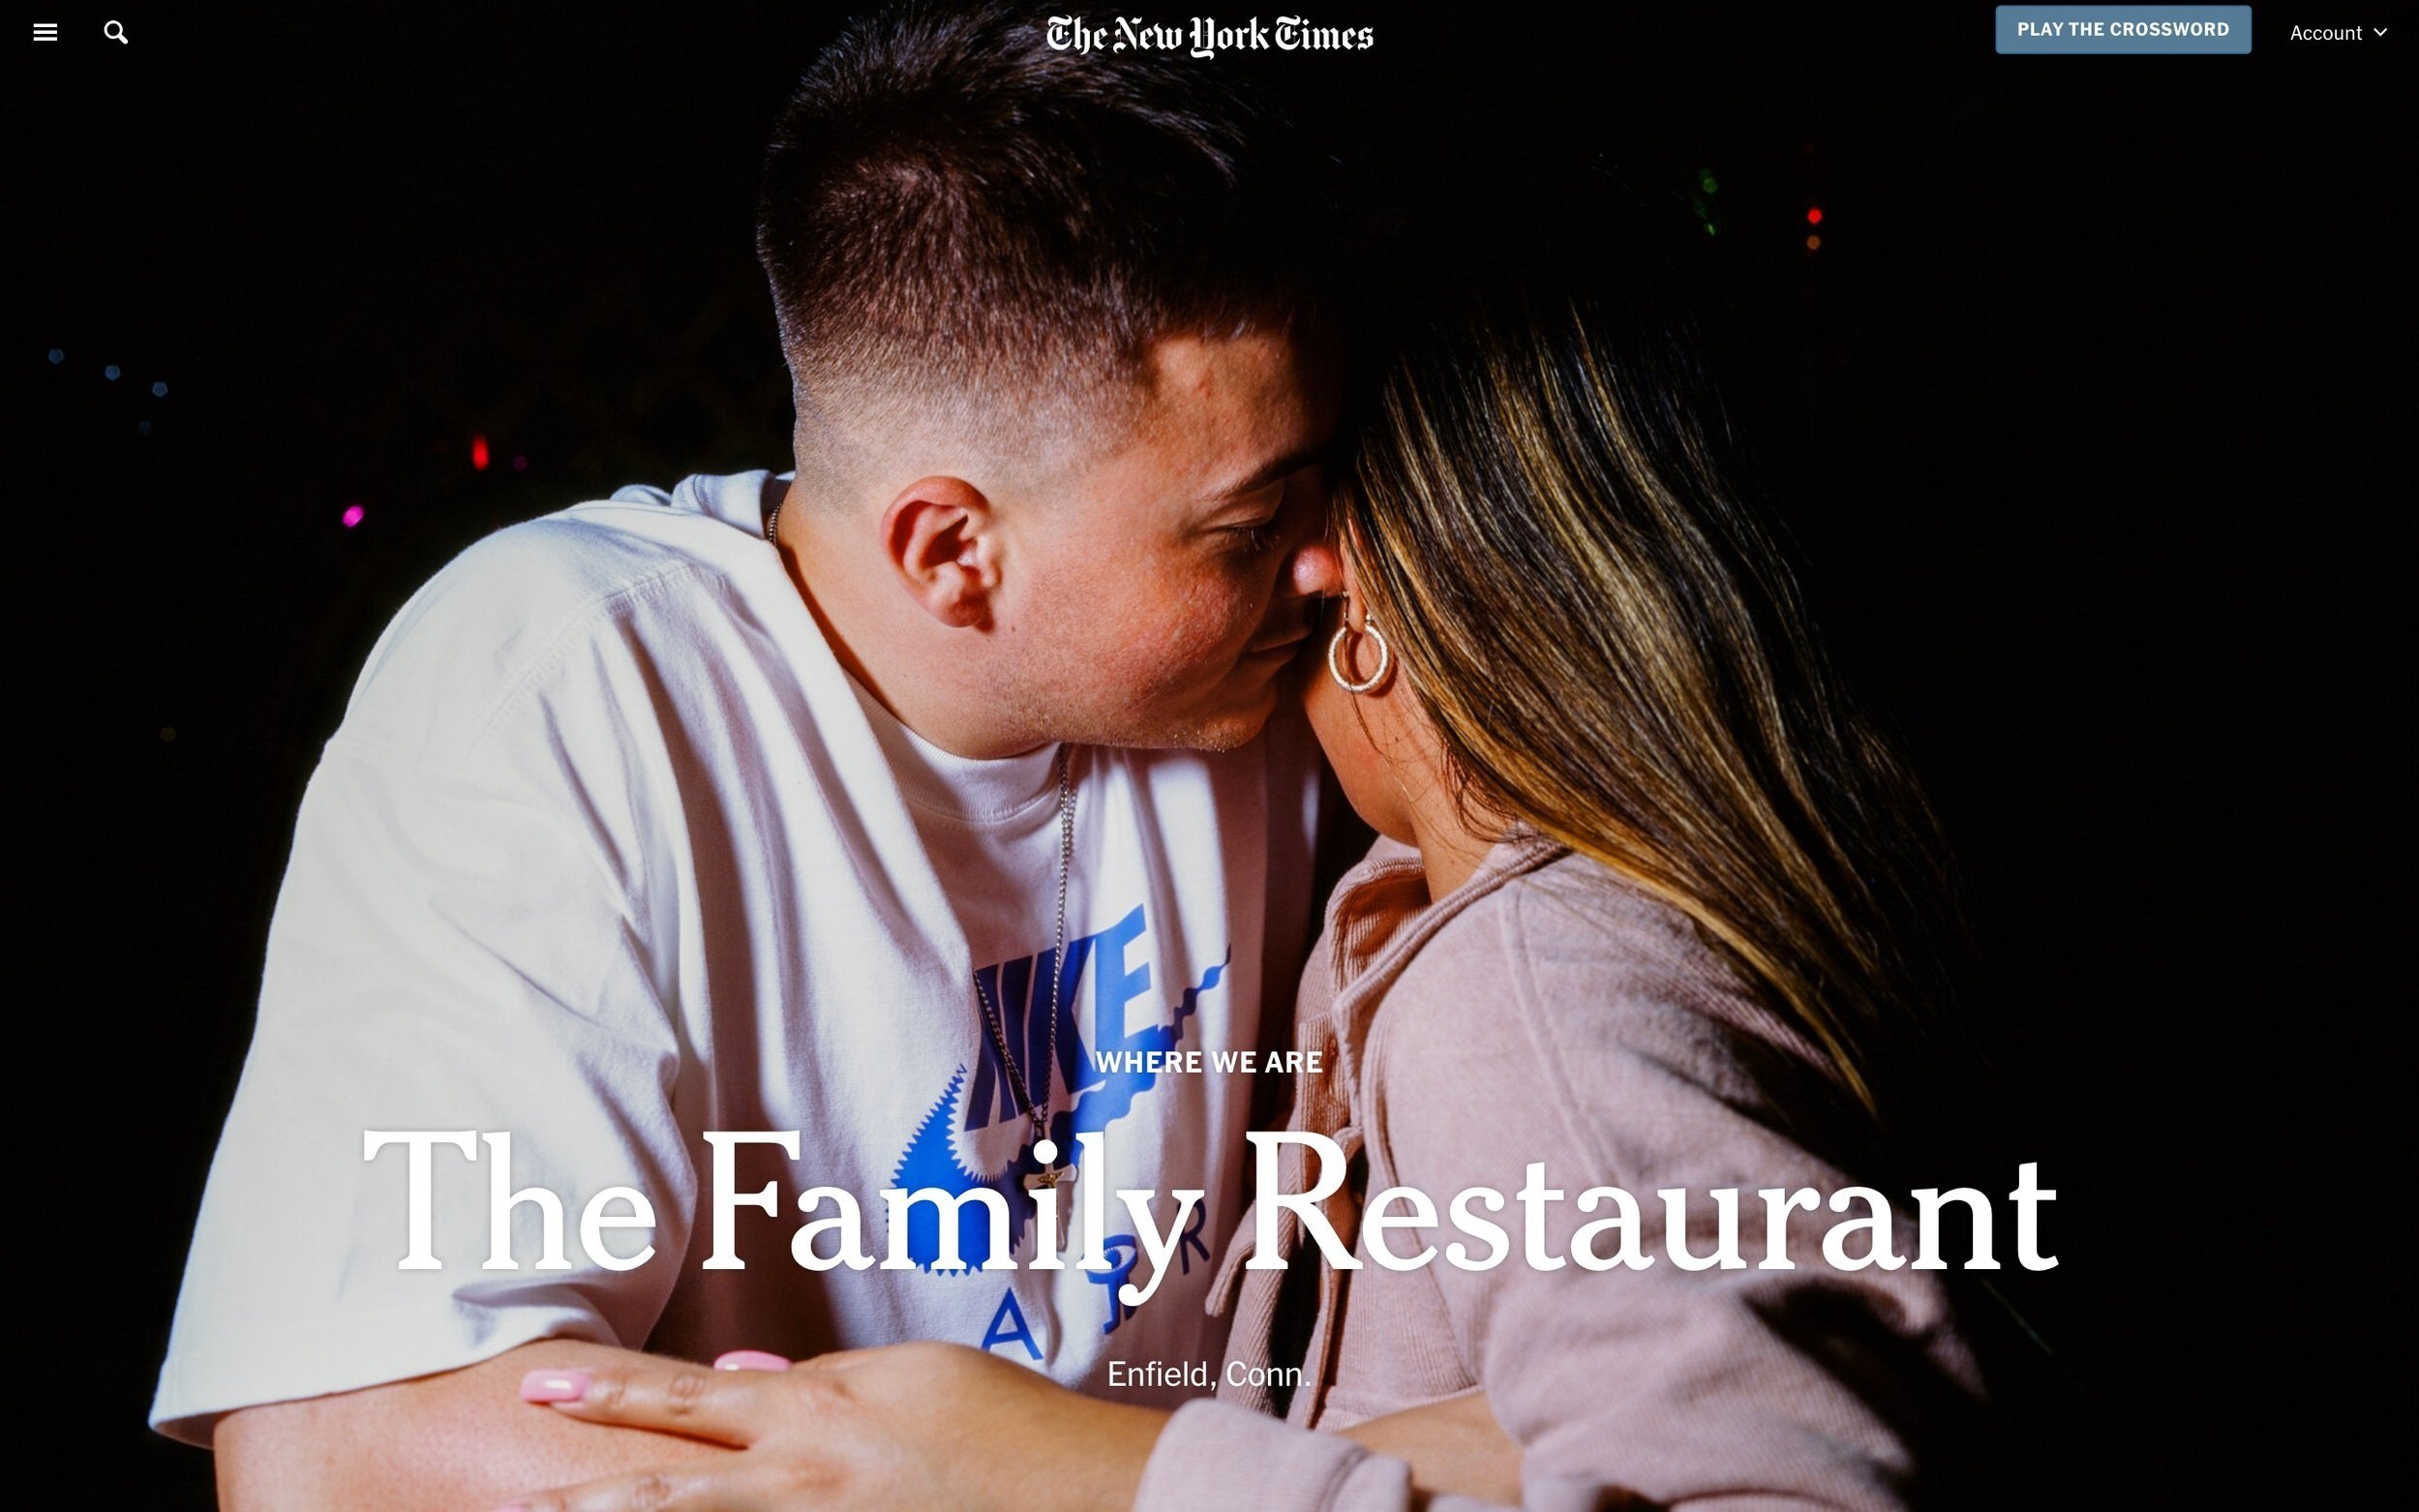  The Family Restaurant - The New York Times, February, 2023 